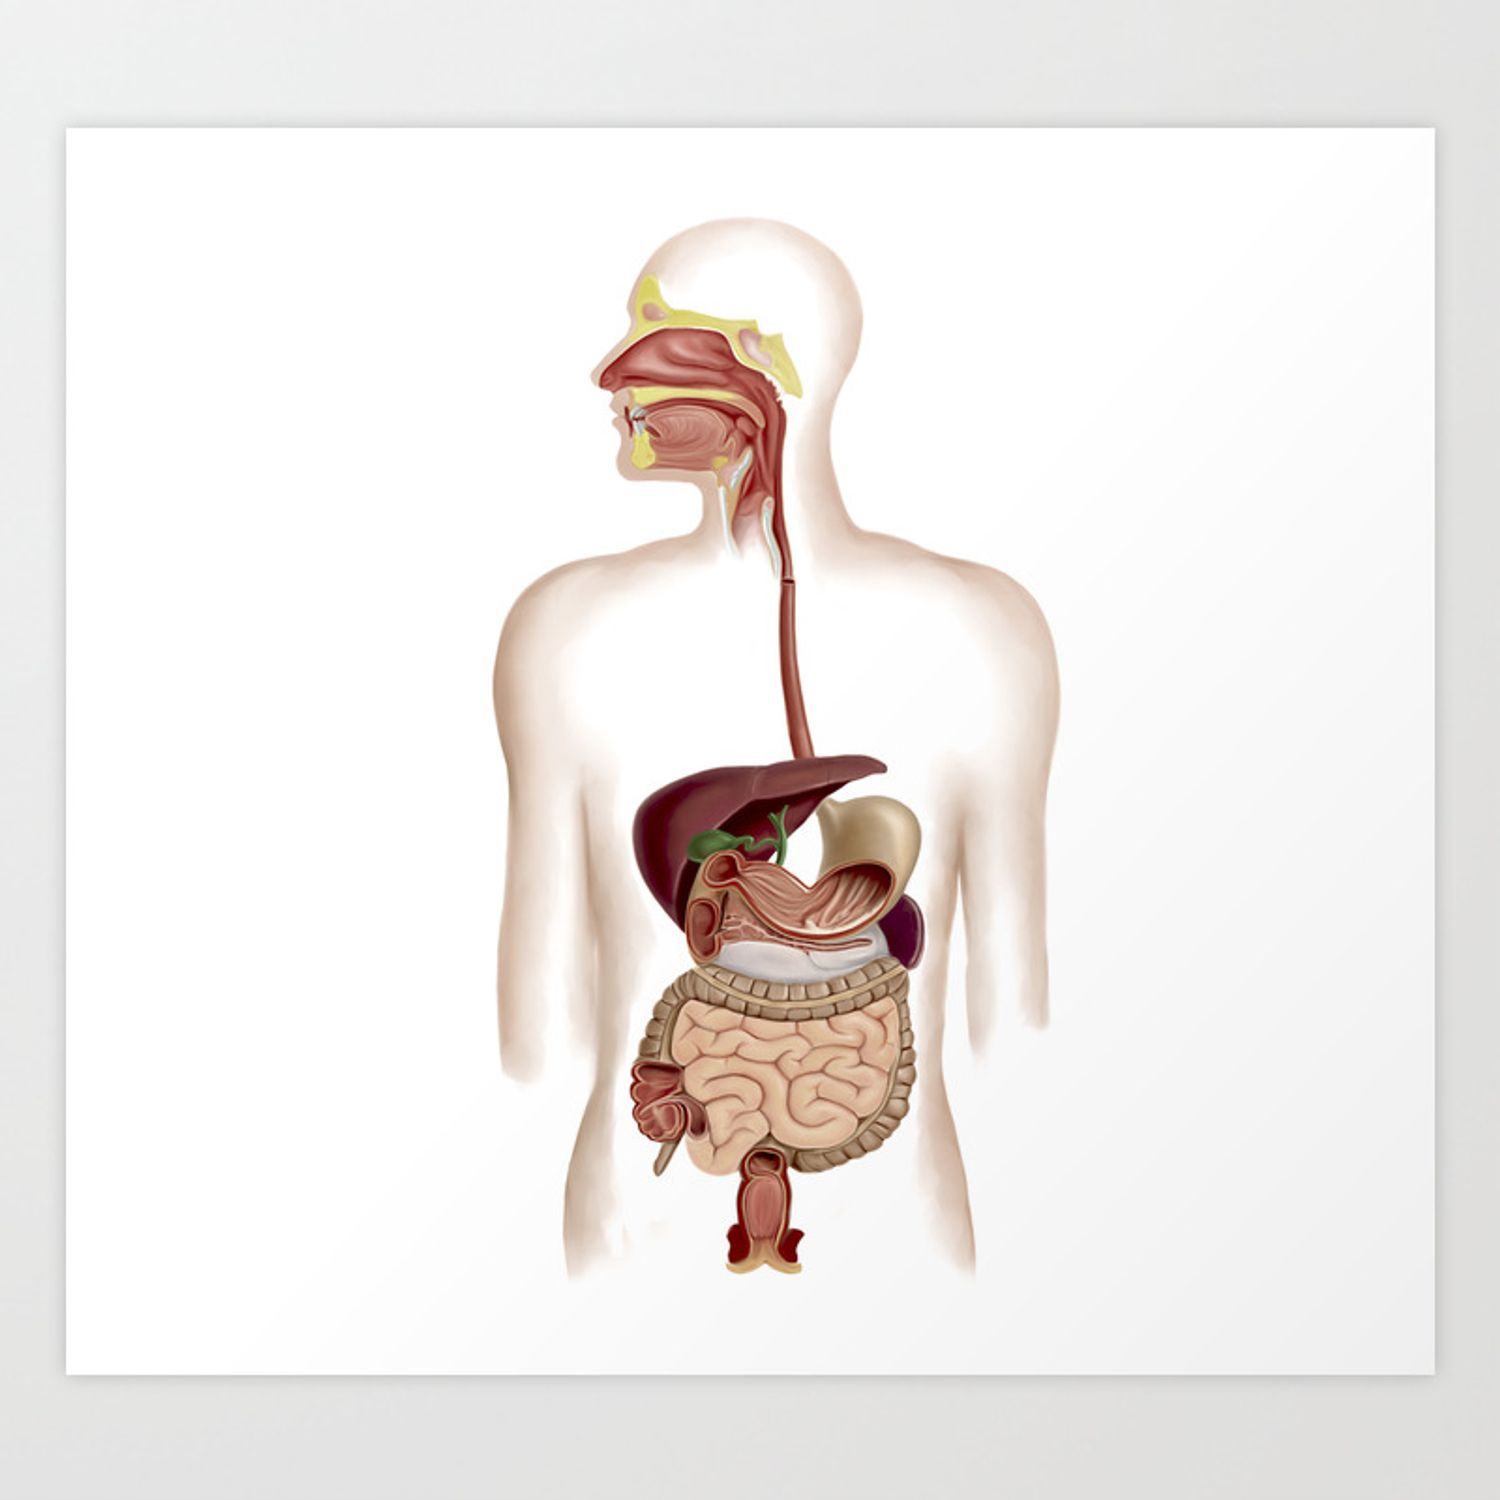 Органы желудочно-кишечного тракта человека